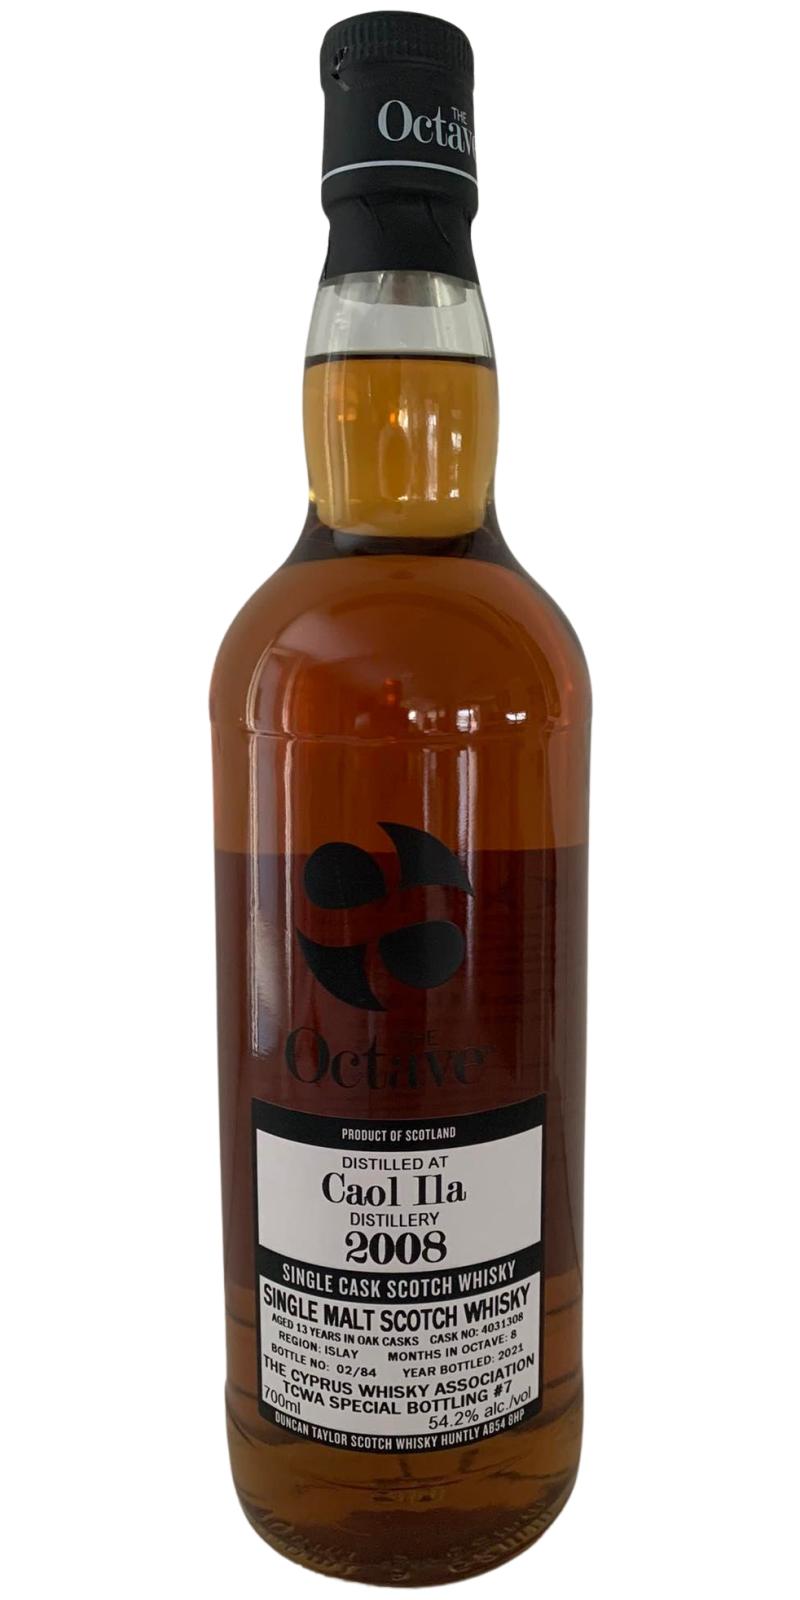 Caol Ila 2008 DT Octave sherry casks The Cyprus Whisky Association 54.2% 700ml